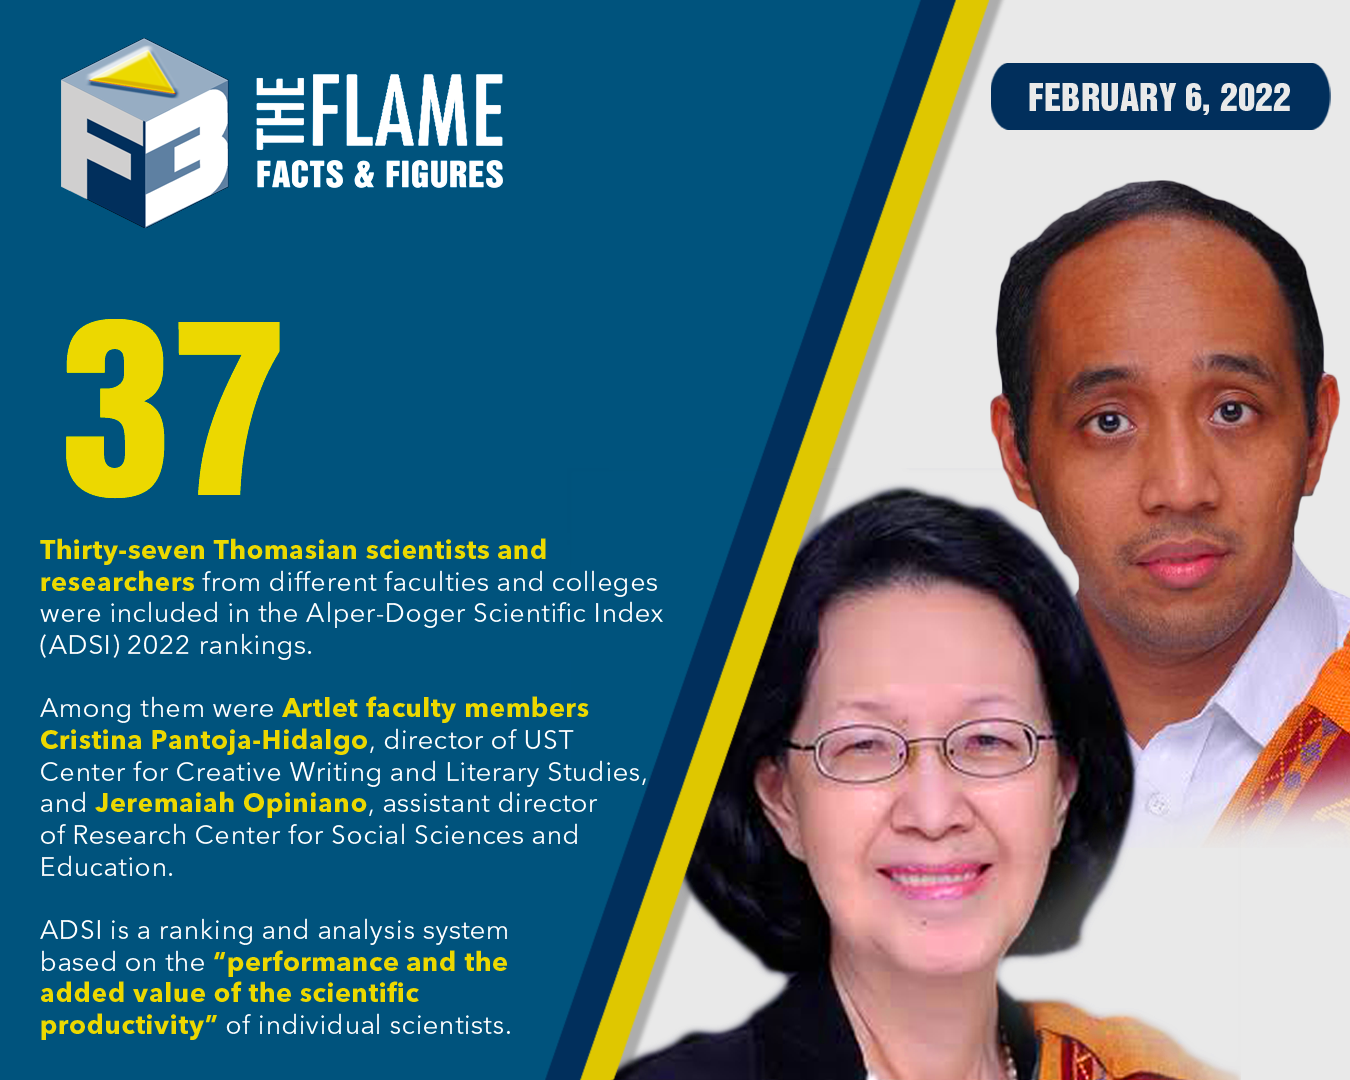 F3 – February 6, 2022 - The Flame